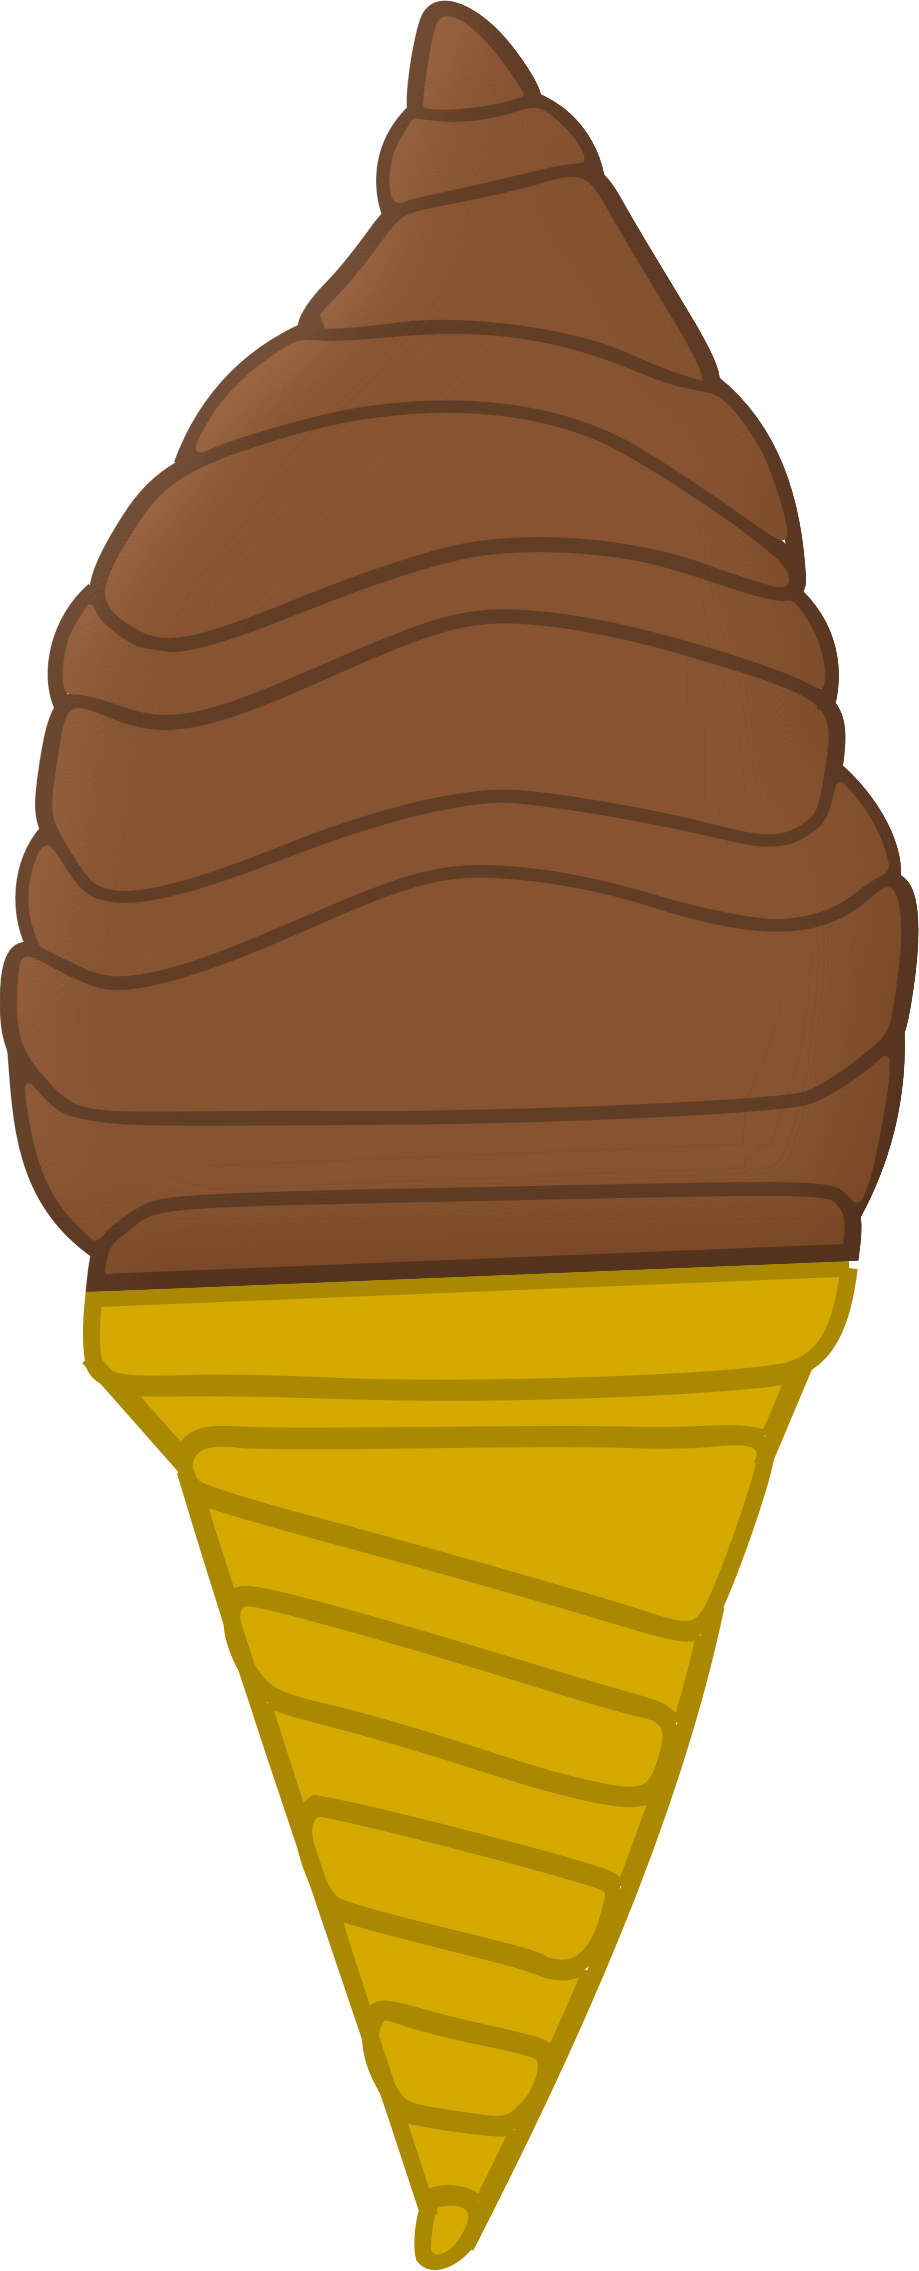 A Cartoon Of An Ice Cream Cone